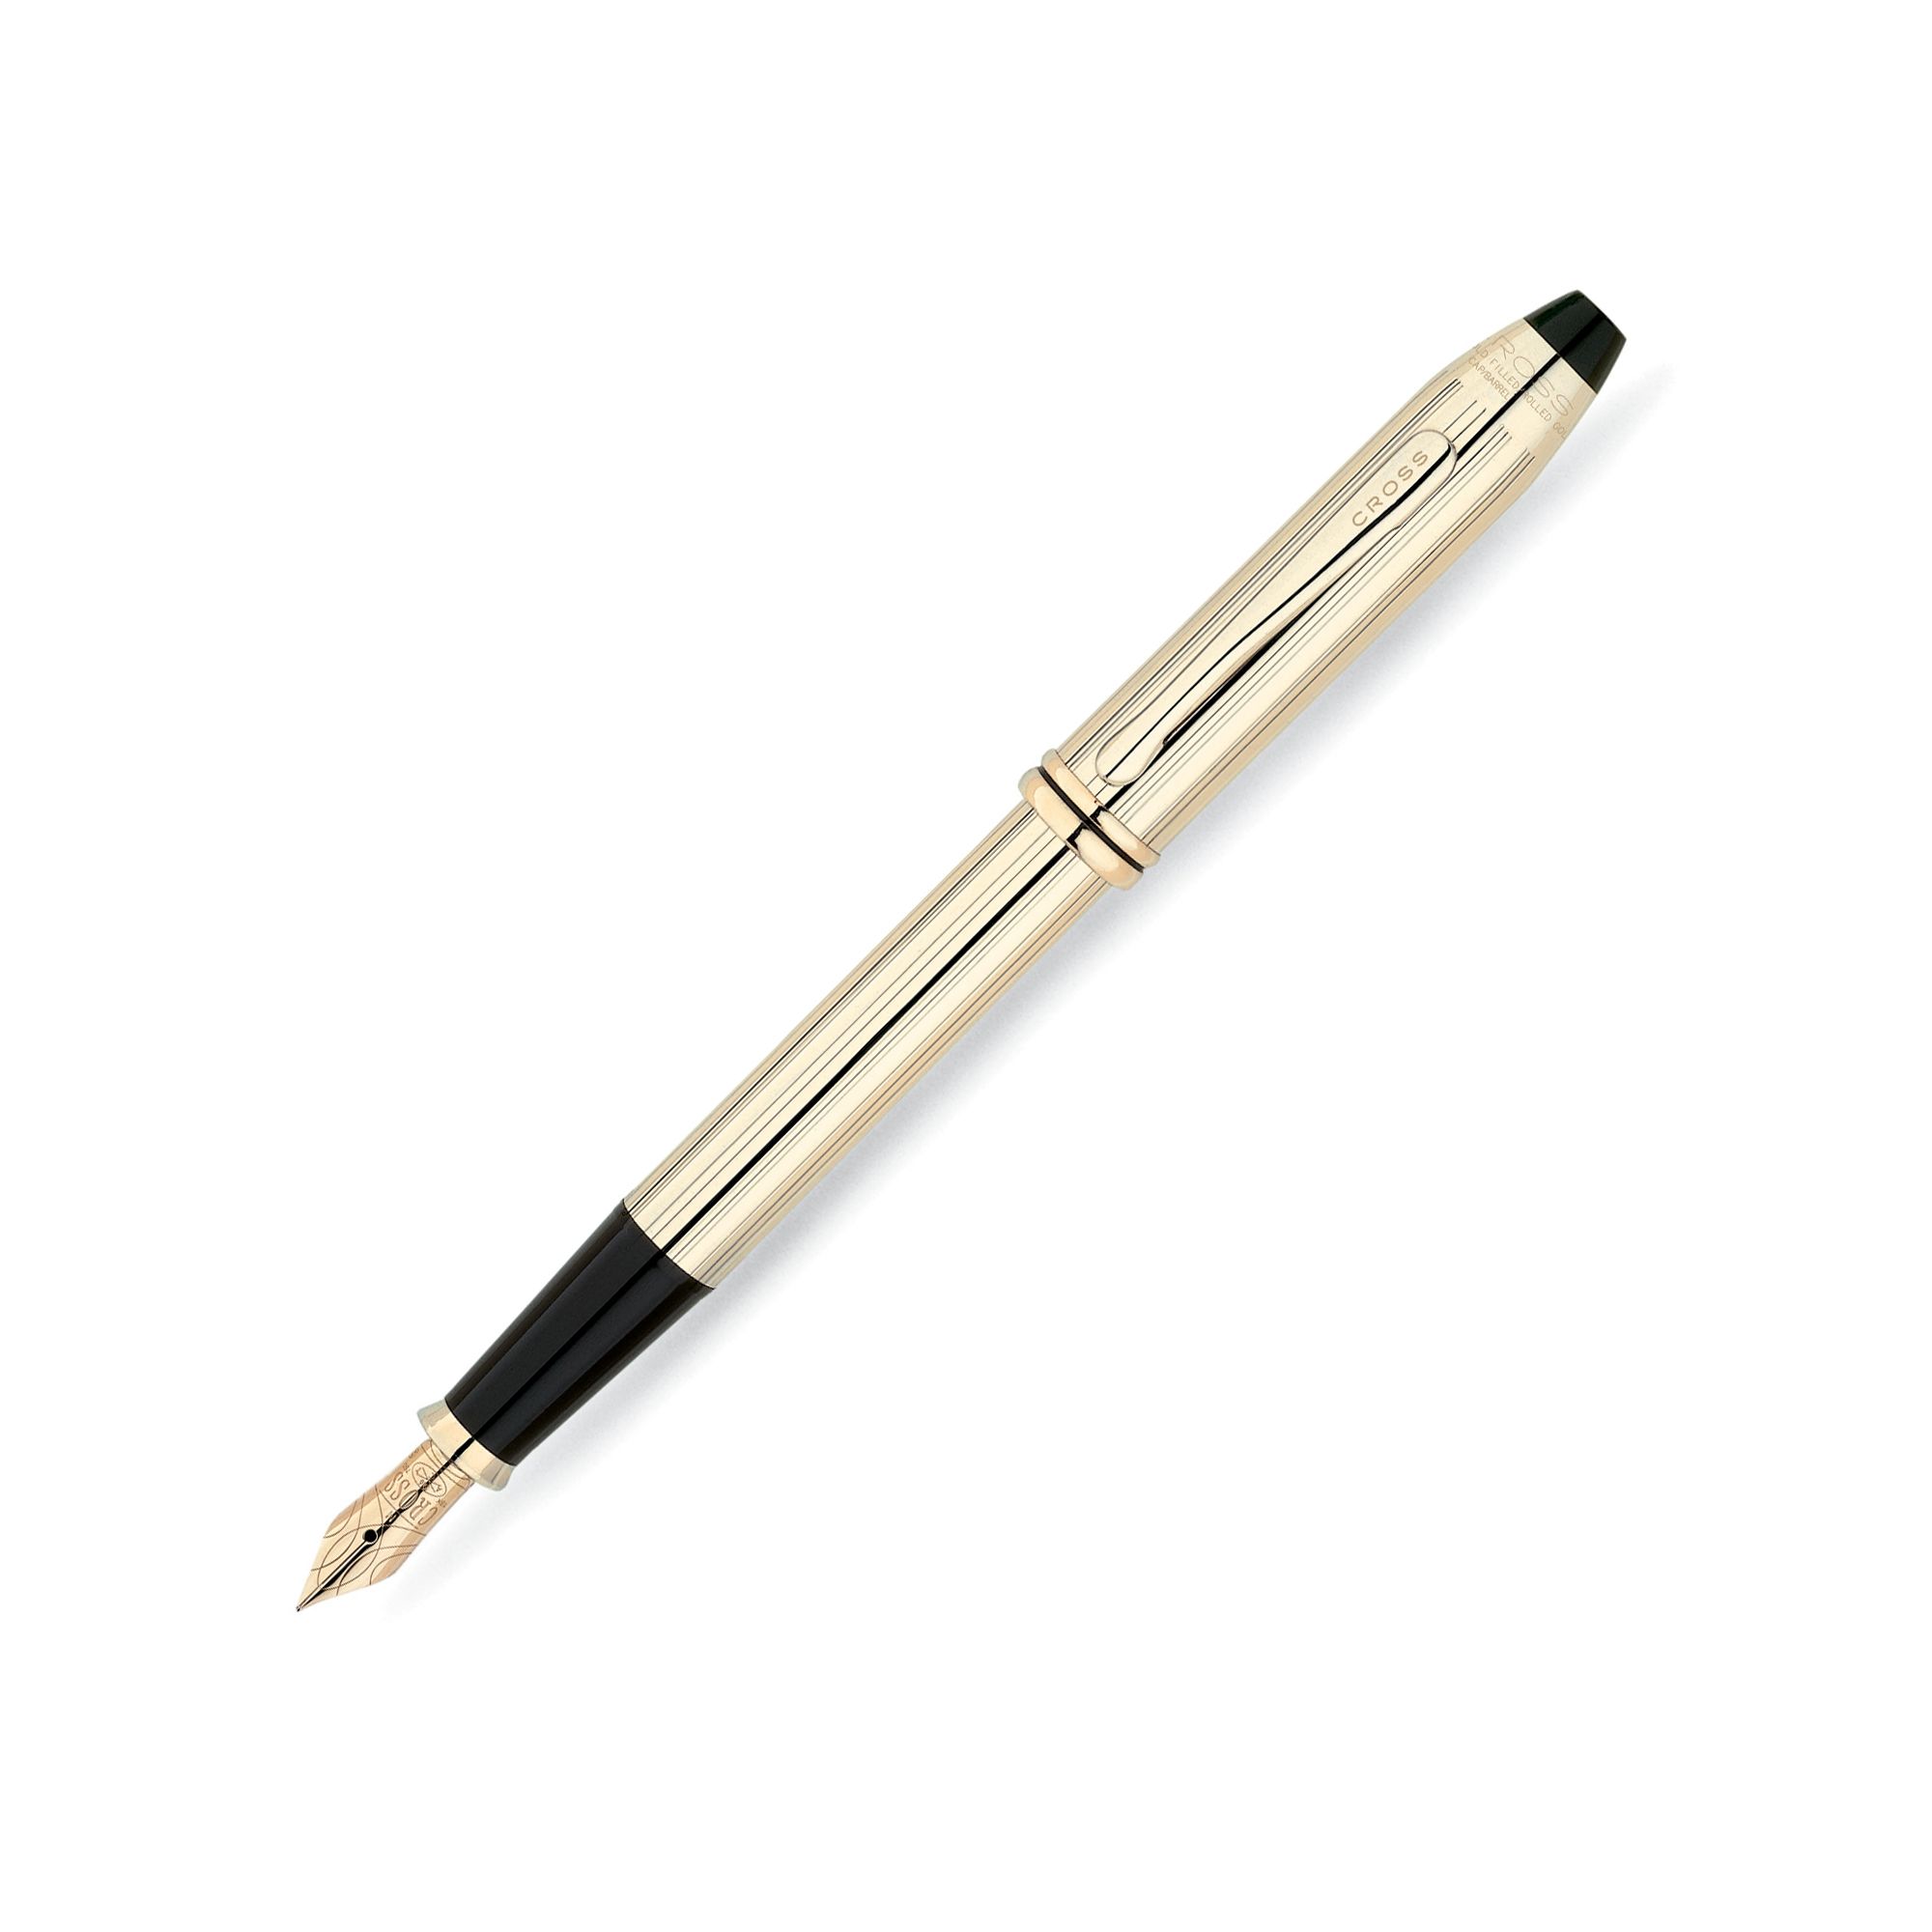 Cross Townsend 10K Rolled Gold Fountain pen - Fine Nib at Tescos Direct